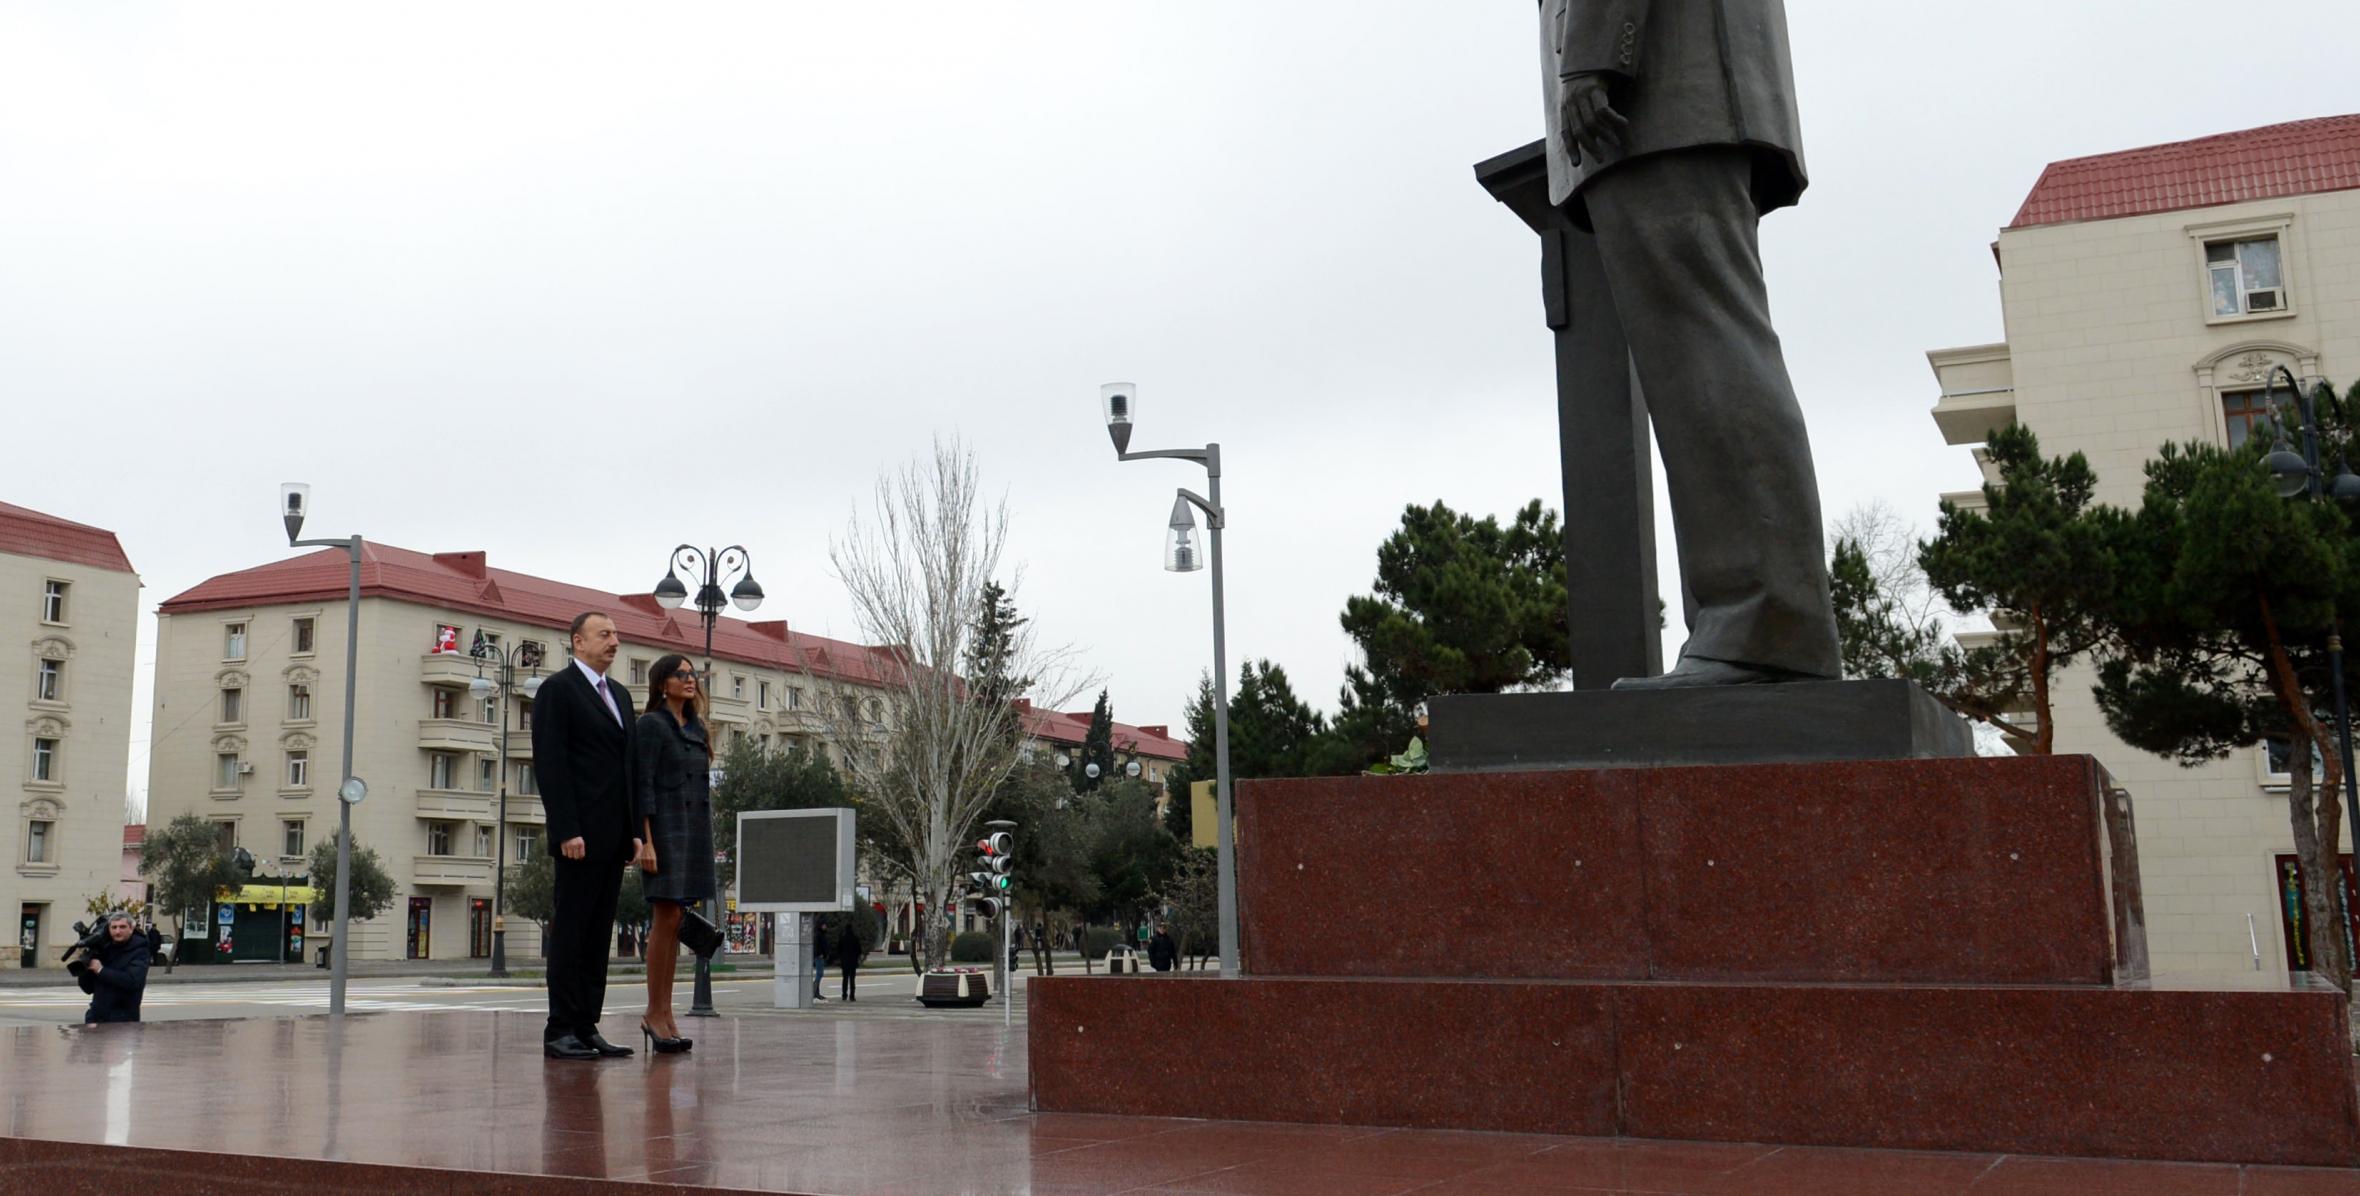 Ilham Aliyev visited the statue of nationwide leader Heydar Aliyev in Sumgayit